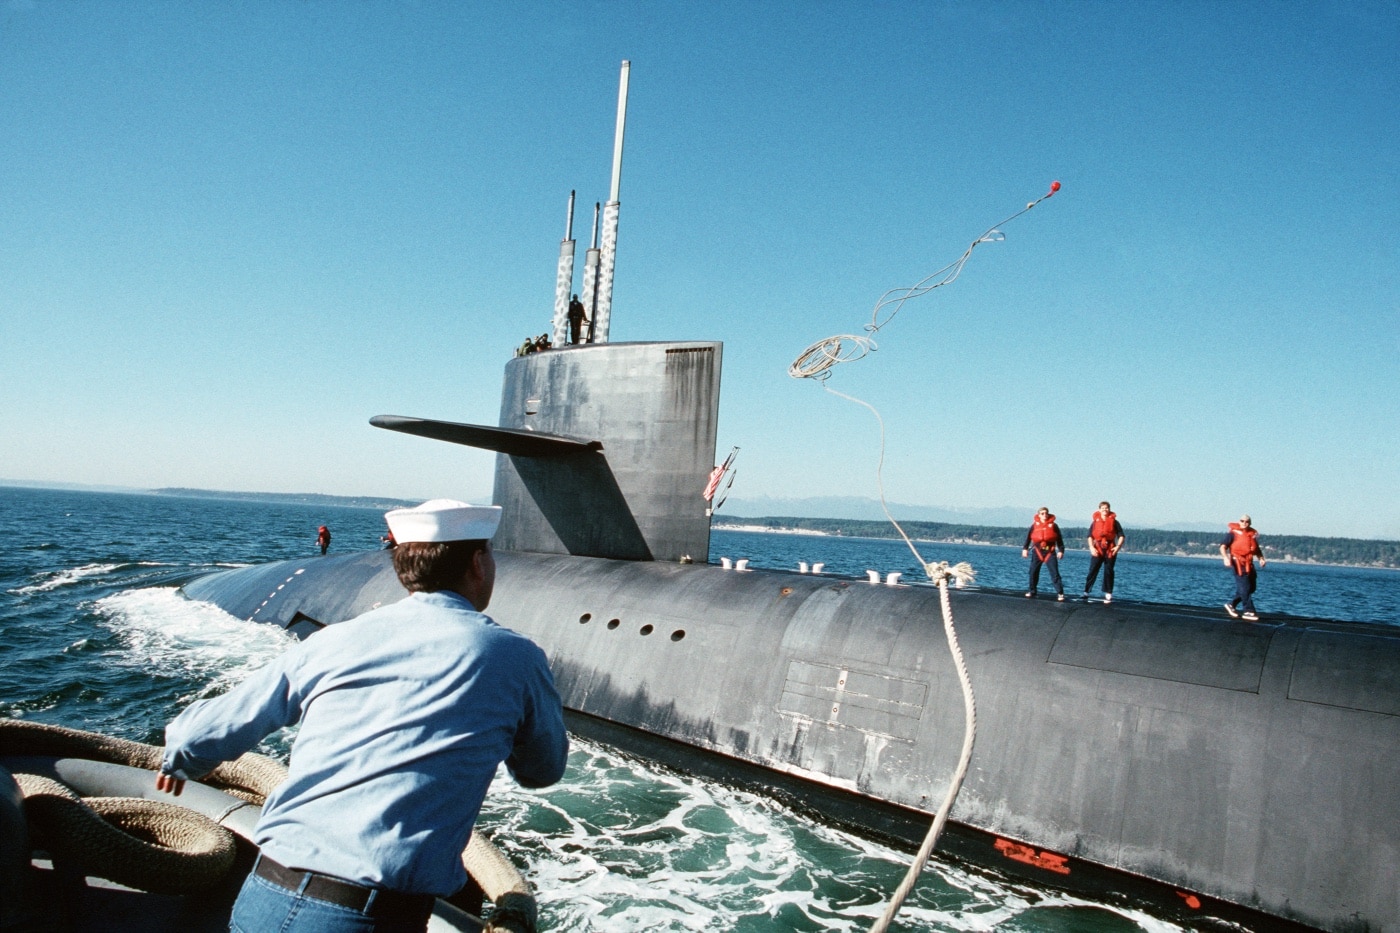 sailor on tug boat throws line to sailors on USS Alabama